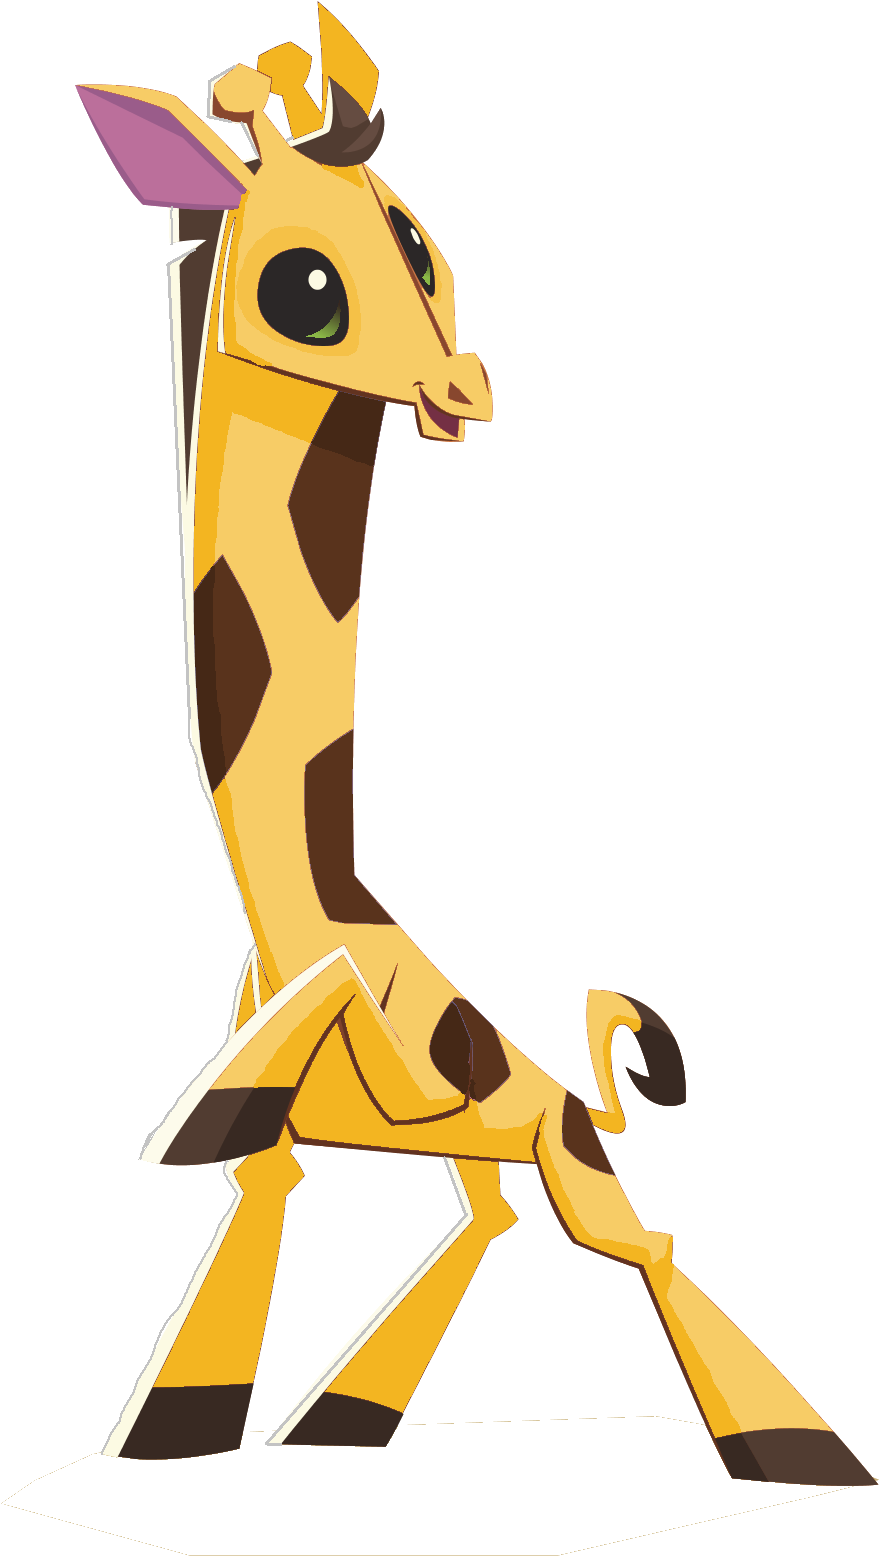 Animated Giraffe Character Sitting PNG image